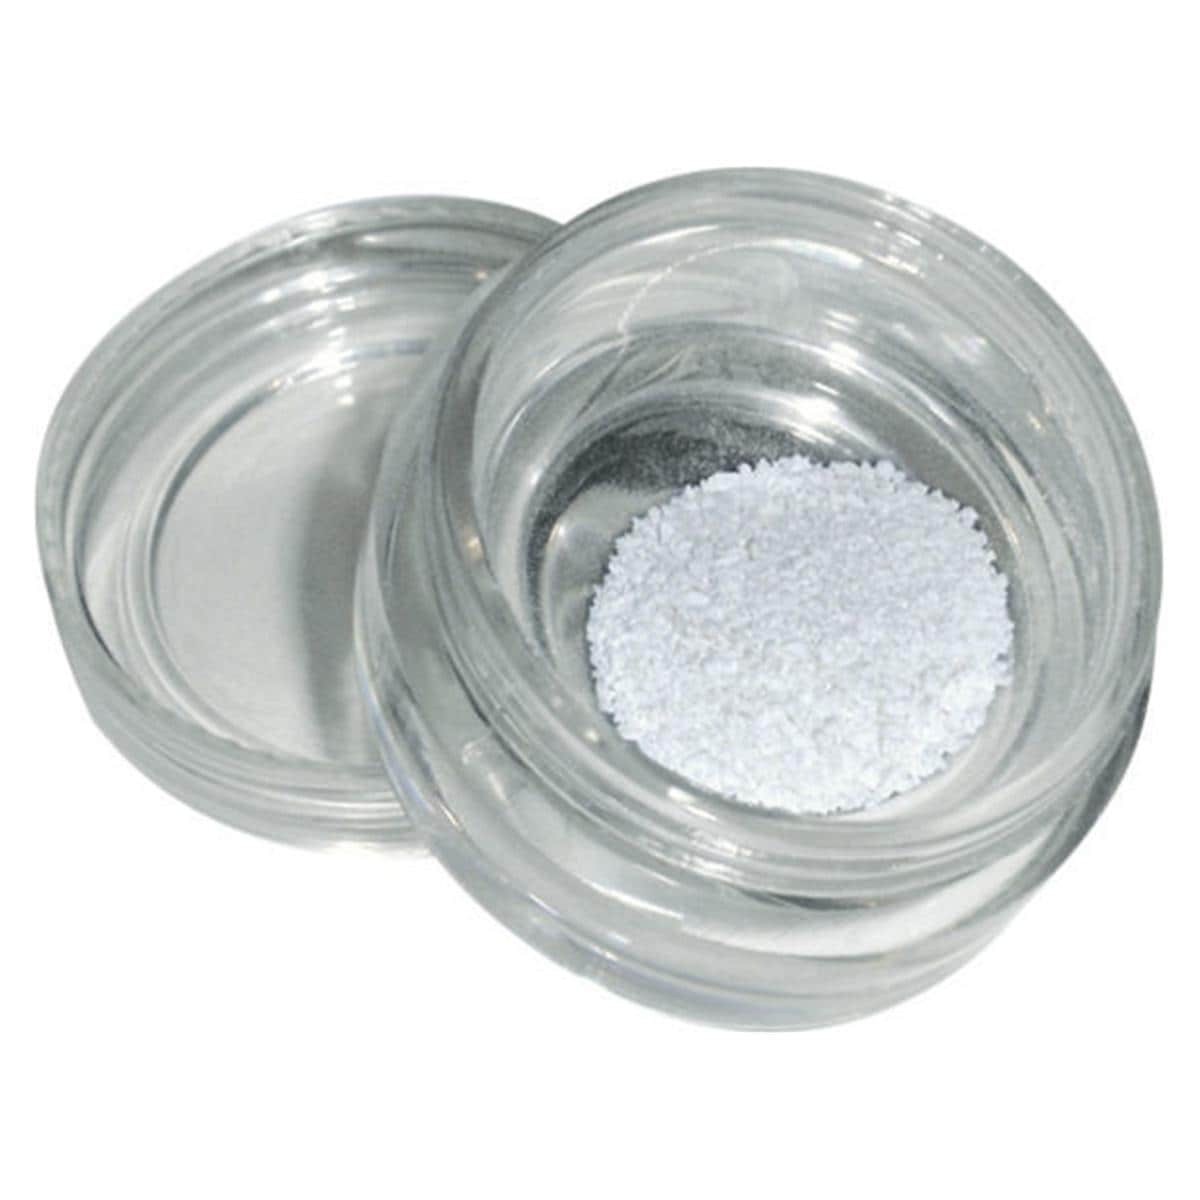 NuOss® Granulat - Spongiosagranulat (Cancellous), 0,25 - 1,0 mm, Packung 1,0 g